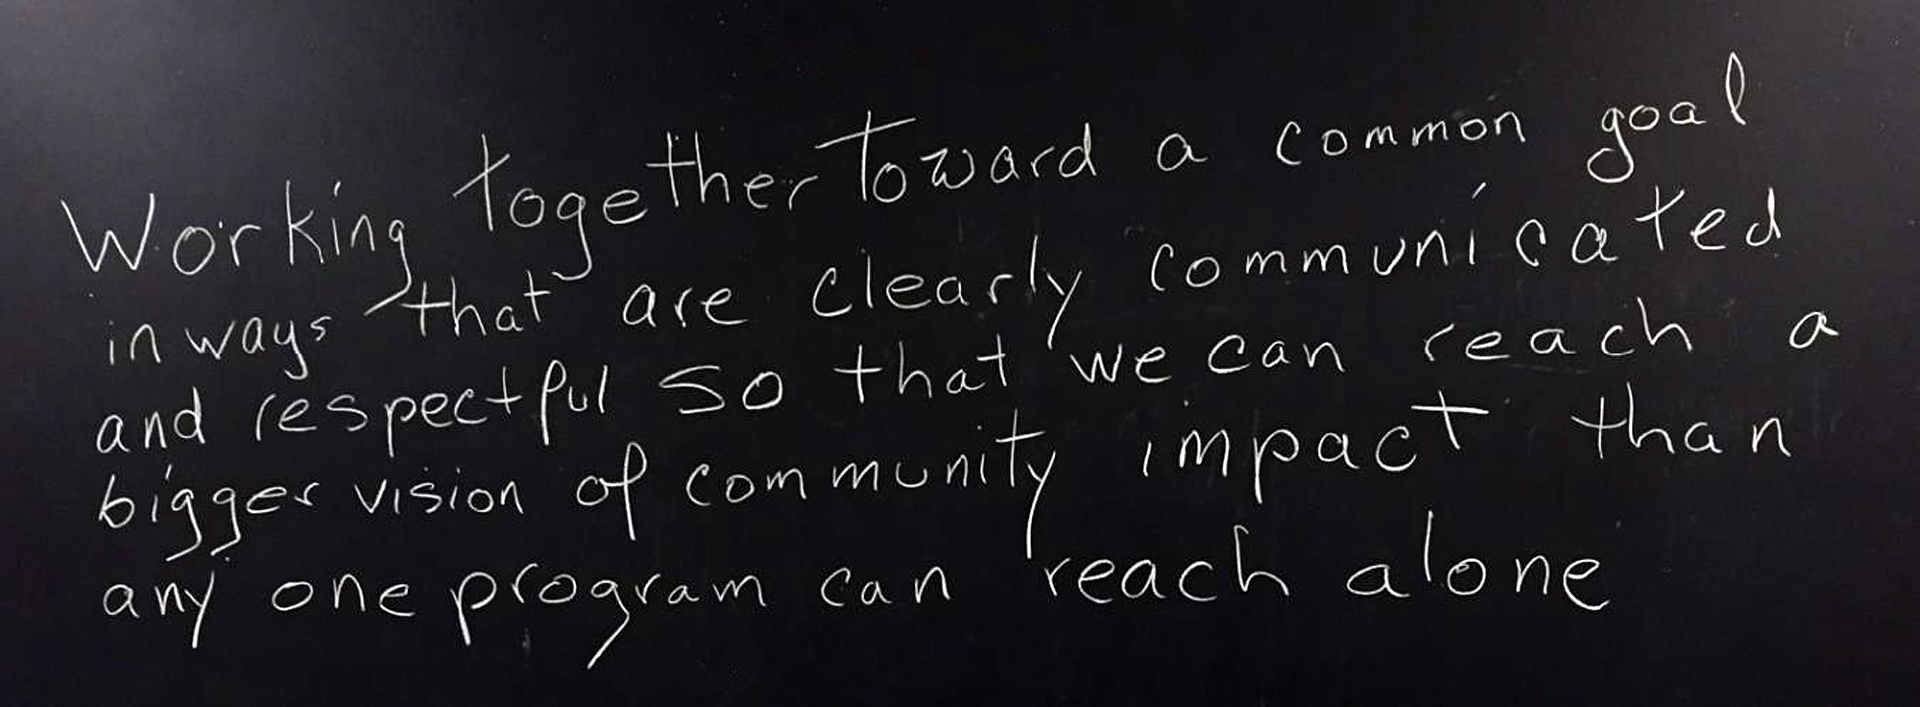 Positive community impact message